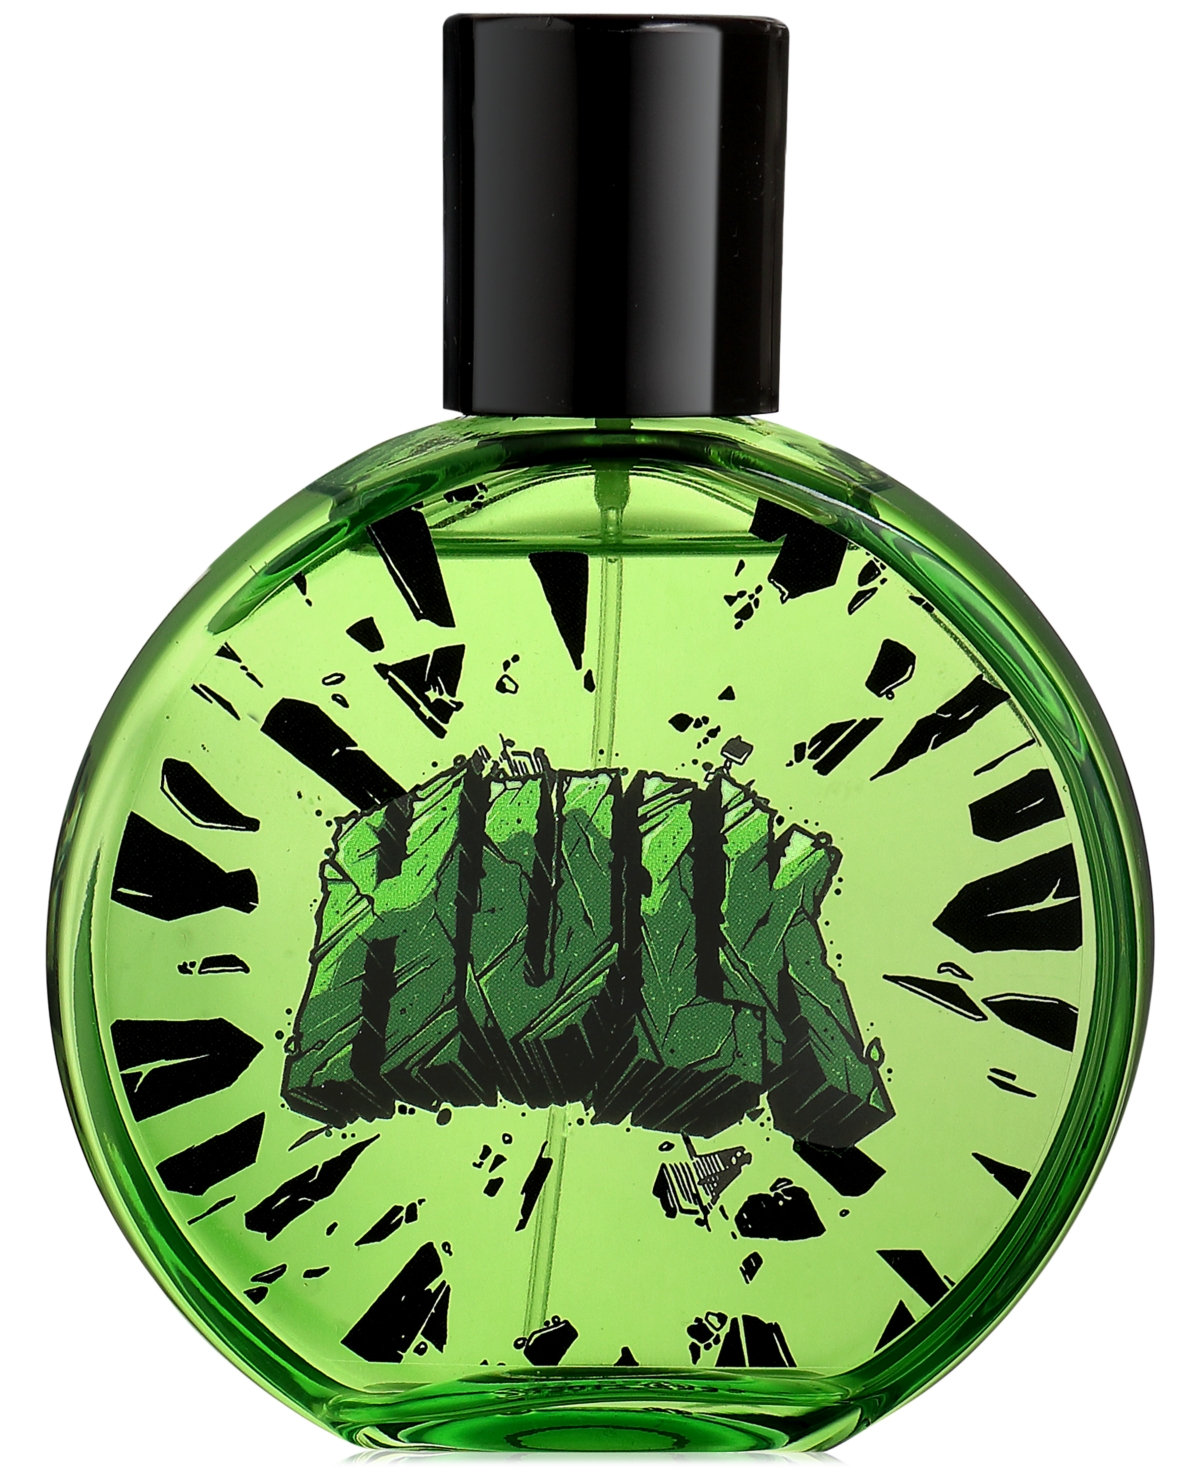 Hulk Eau de Toilette Spray, 3.4 oz.